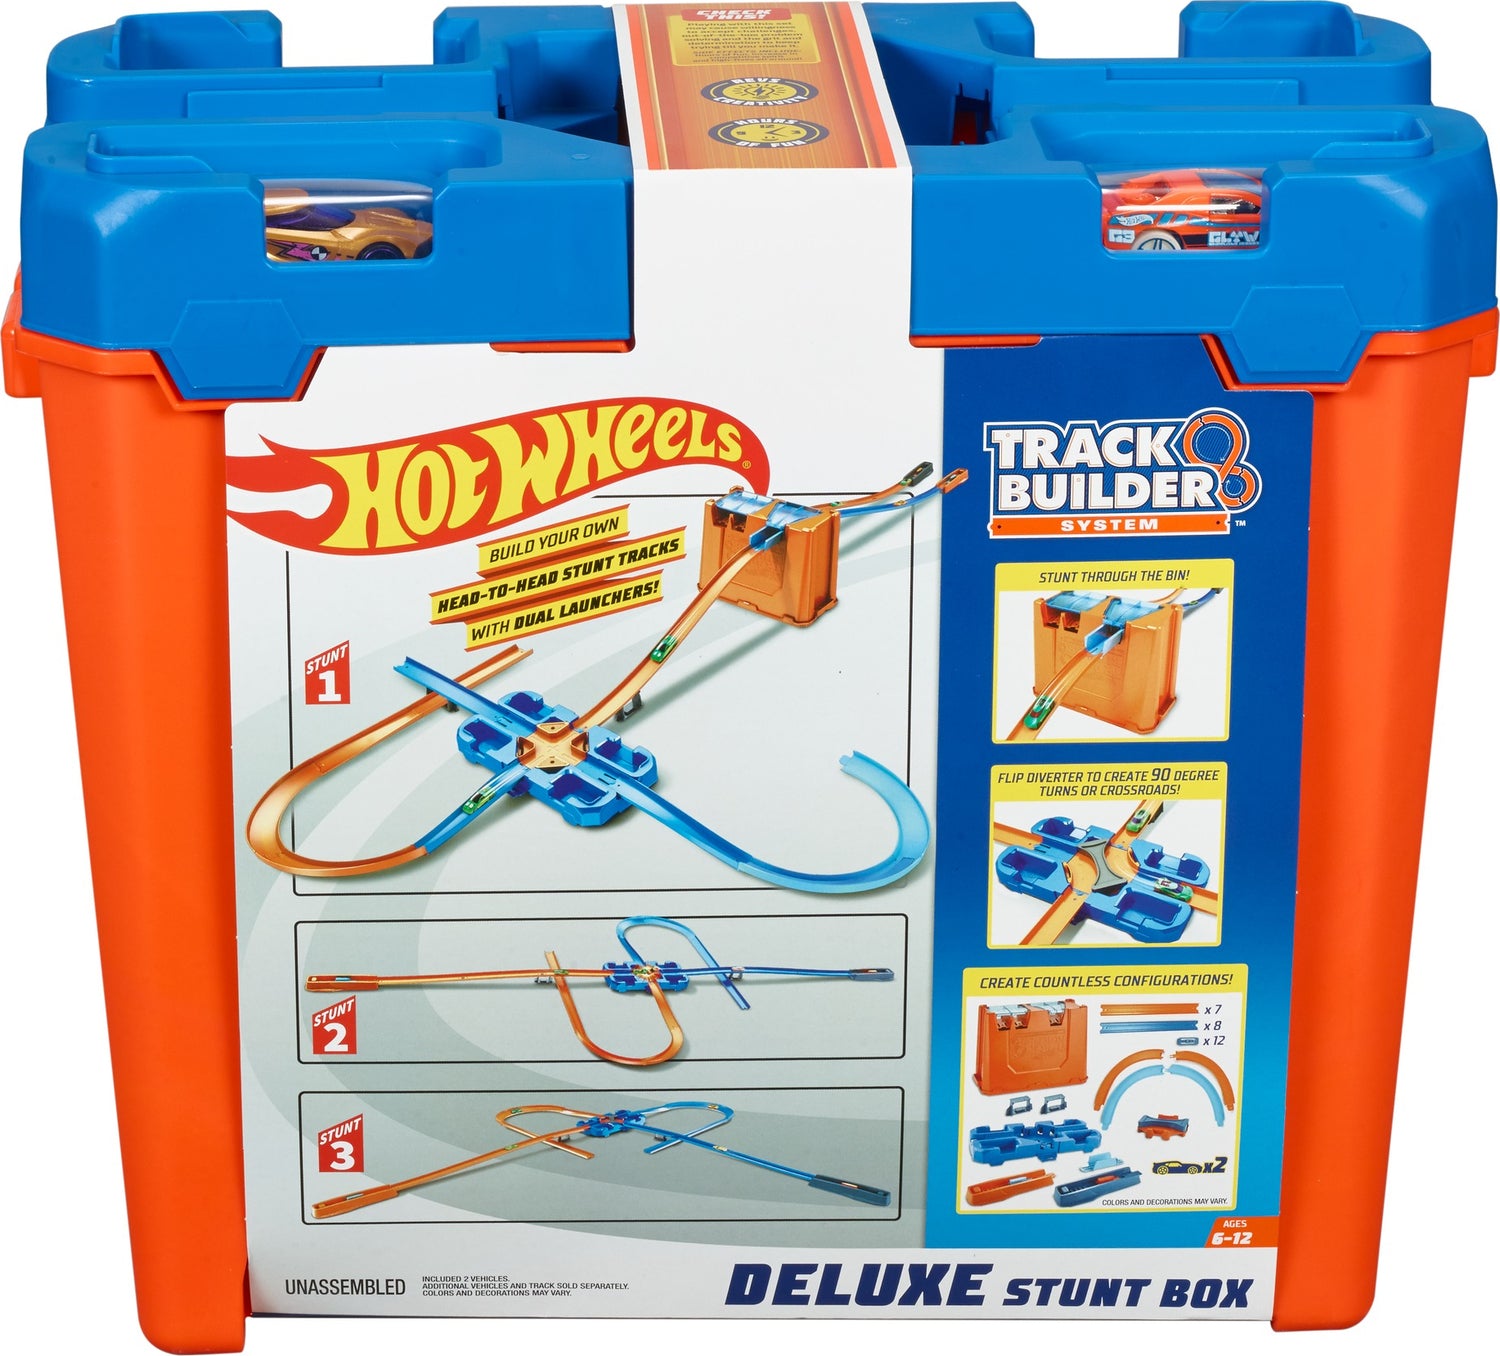 Hot Wheels - Track Builder Deluxe Stunt Box